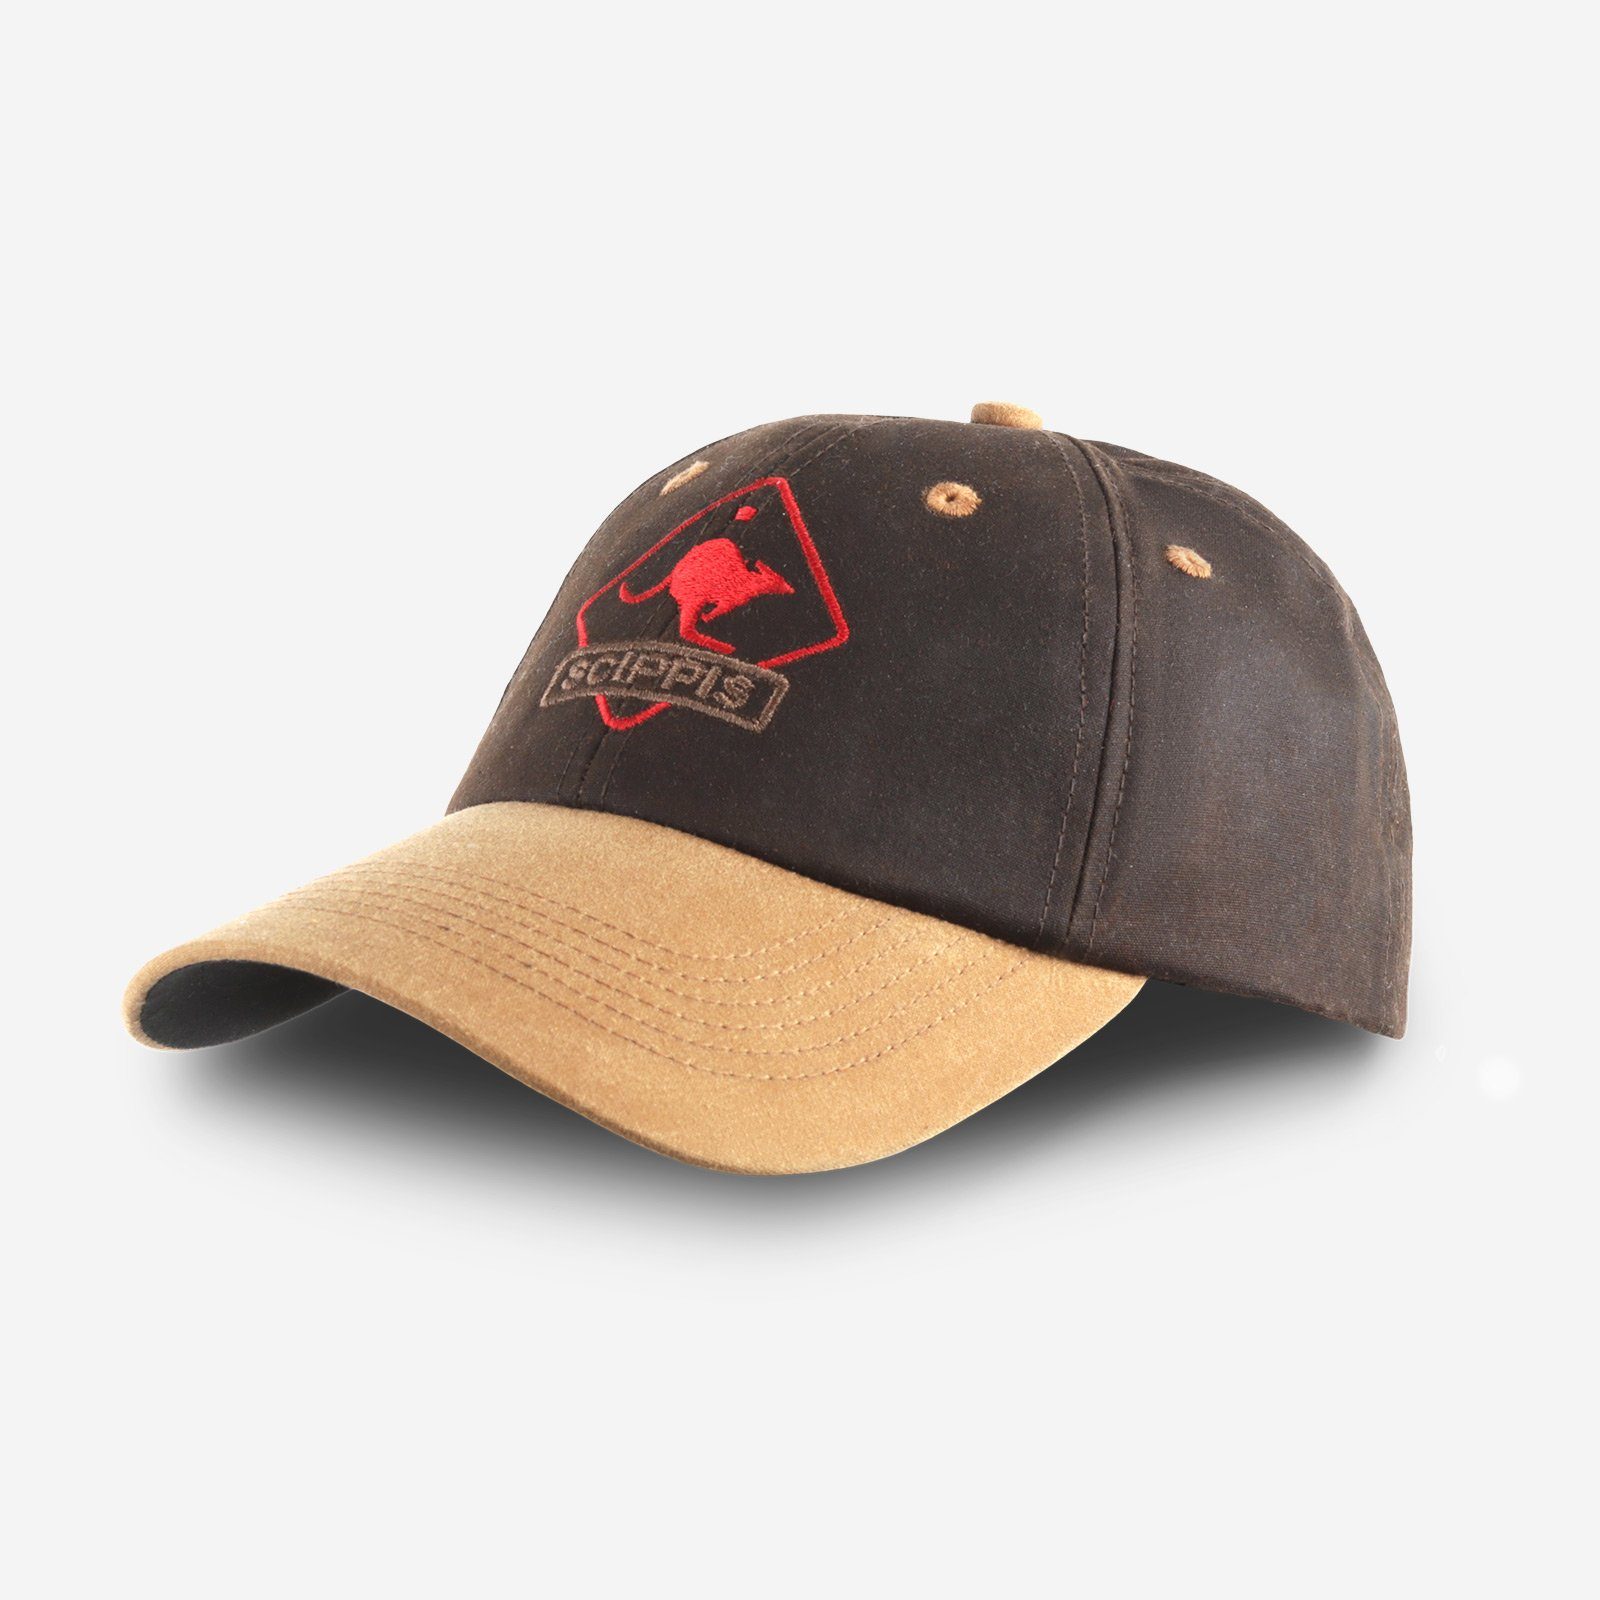 Scippis Baseball Cap OILSKIN CAP Extrem wasserabweisend, windundurchlässig atmungsaktiv tan/brown | Baseball Caps